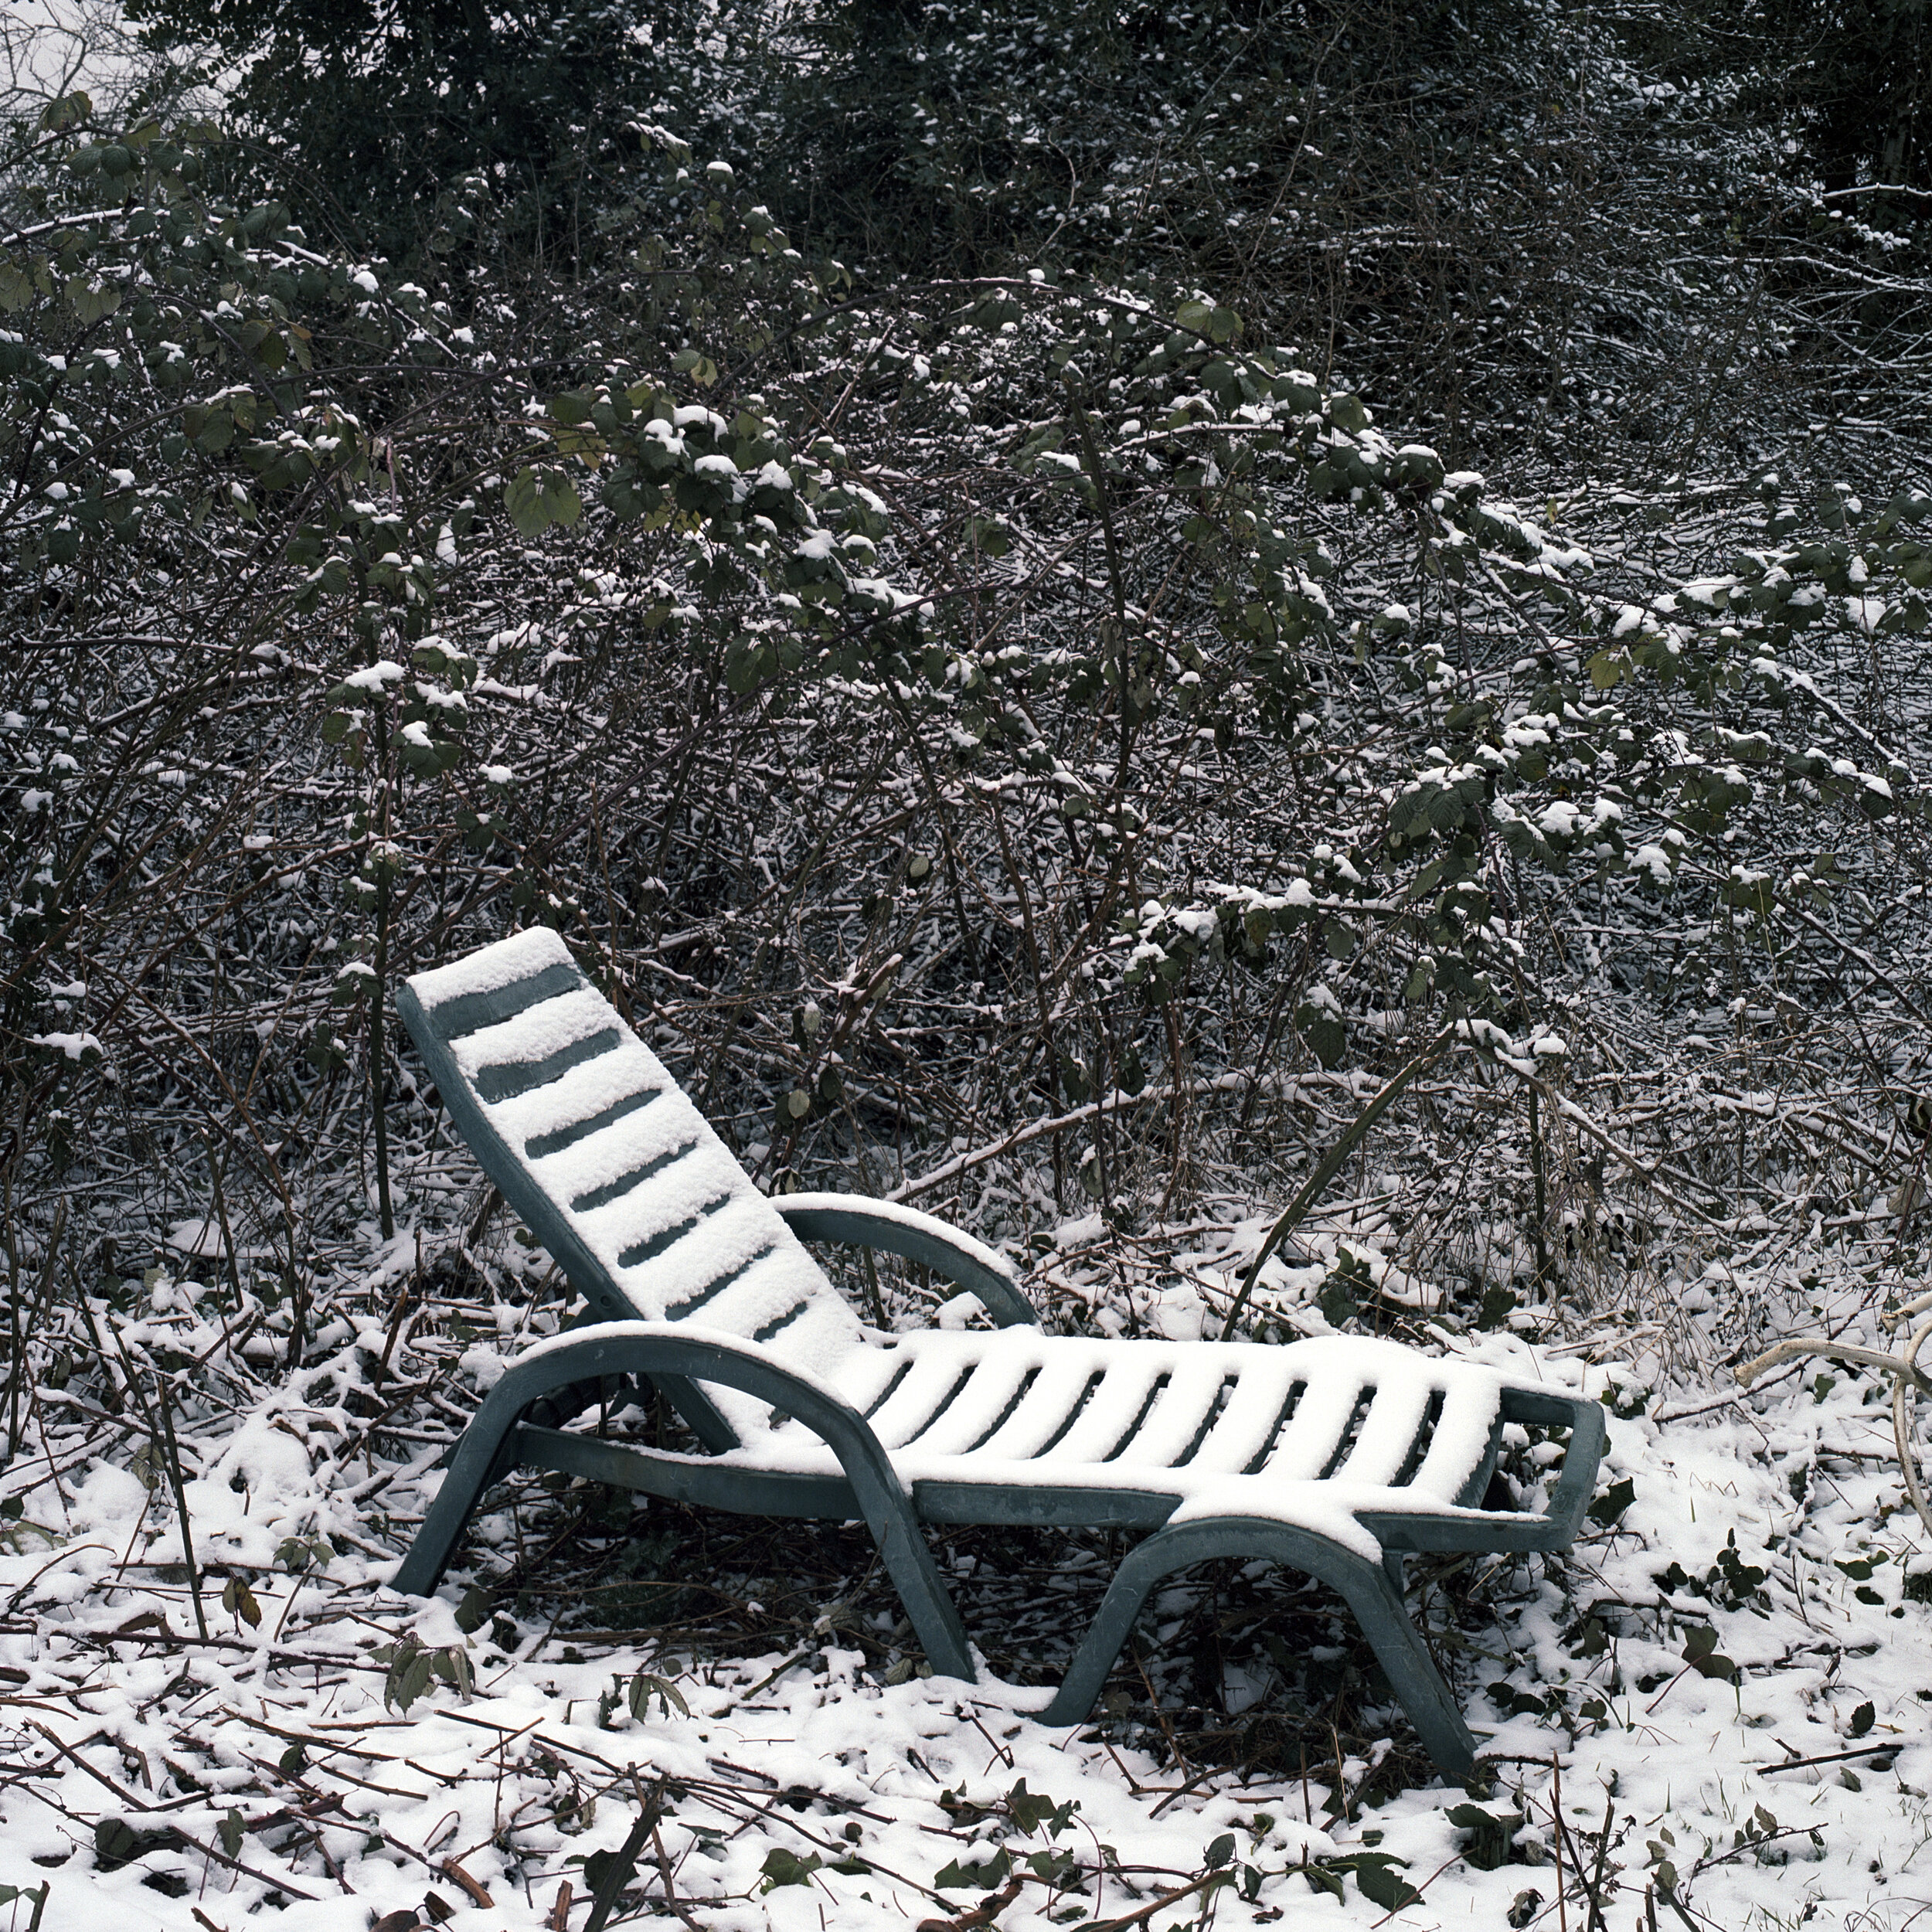 6_lawn chair in snow_2019.jpg